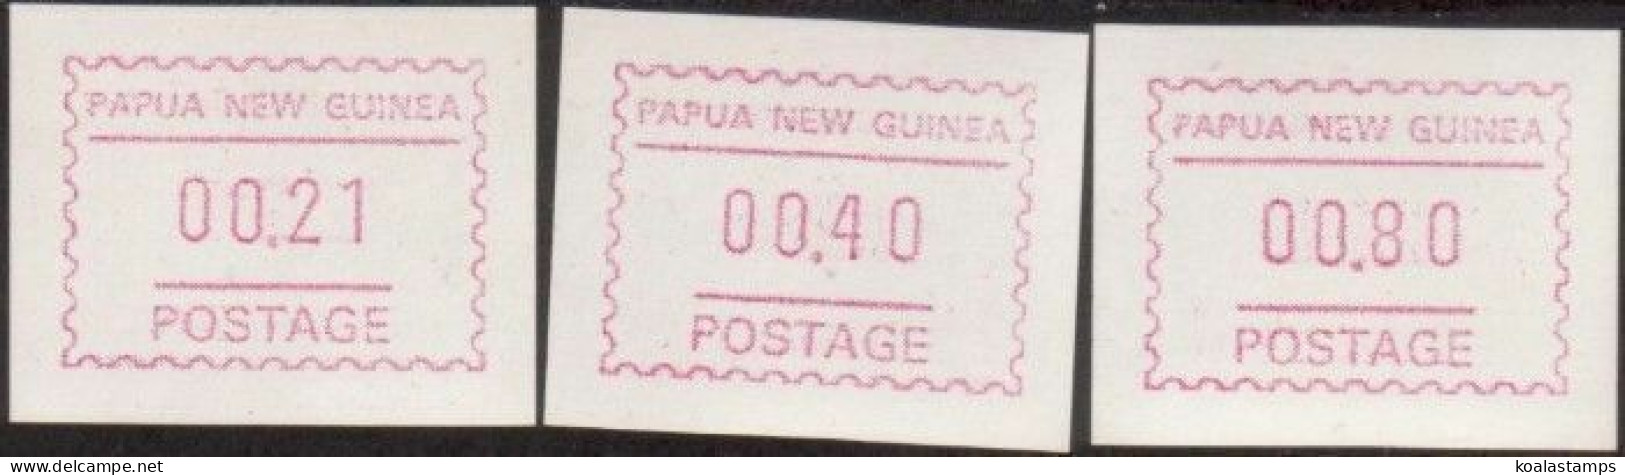 Papua New Guinea 1991 SG631f Framas Set MNH - Papua-Neuguinea